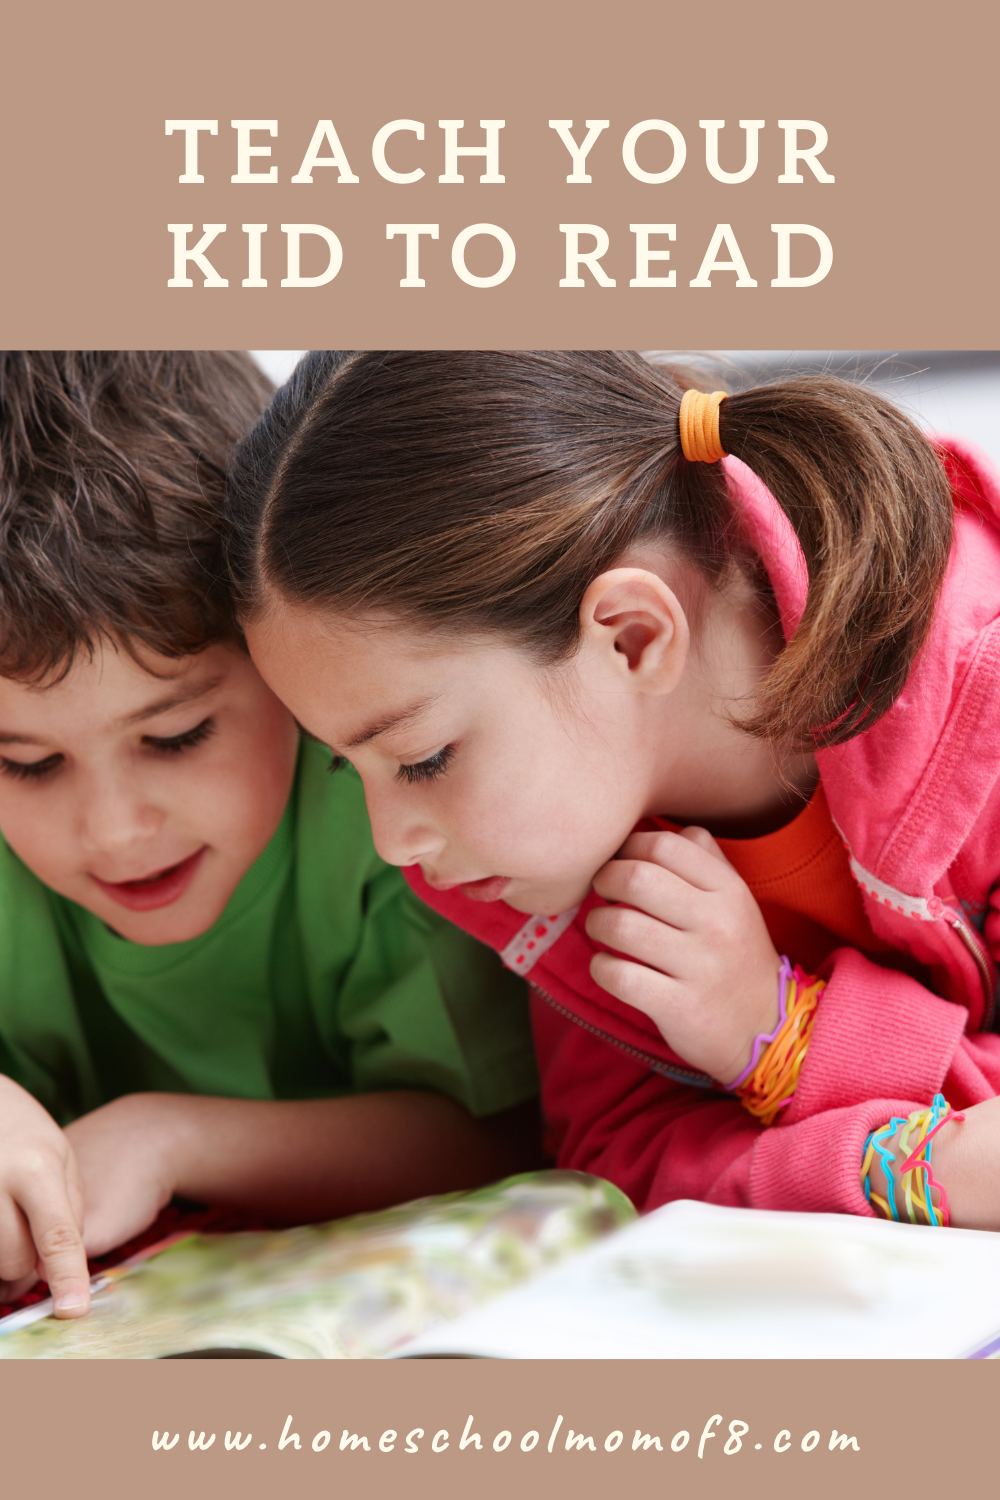 Teach Your Kid To Read - HomeSchool Mom of 8